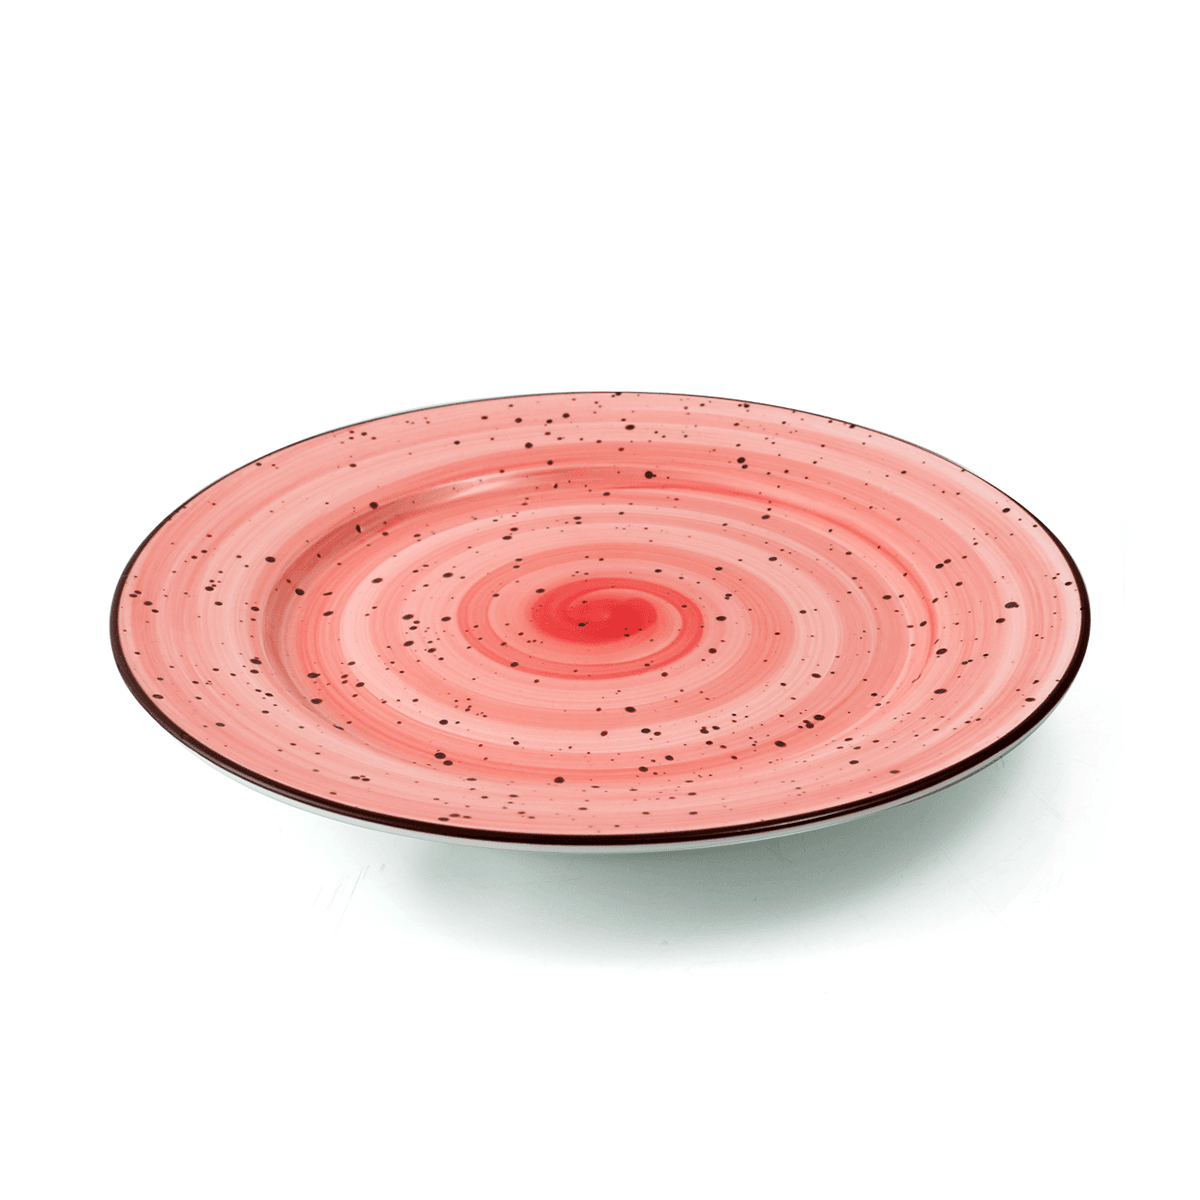 صحن تقديم مسطح بورسلان 10 بوصة أحمر بورسليتا Porceletta Glazed Porcelain Flat Plate